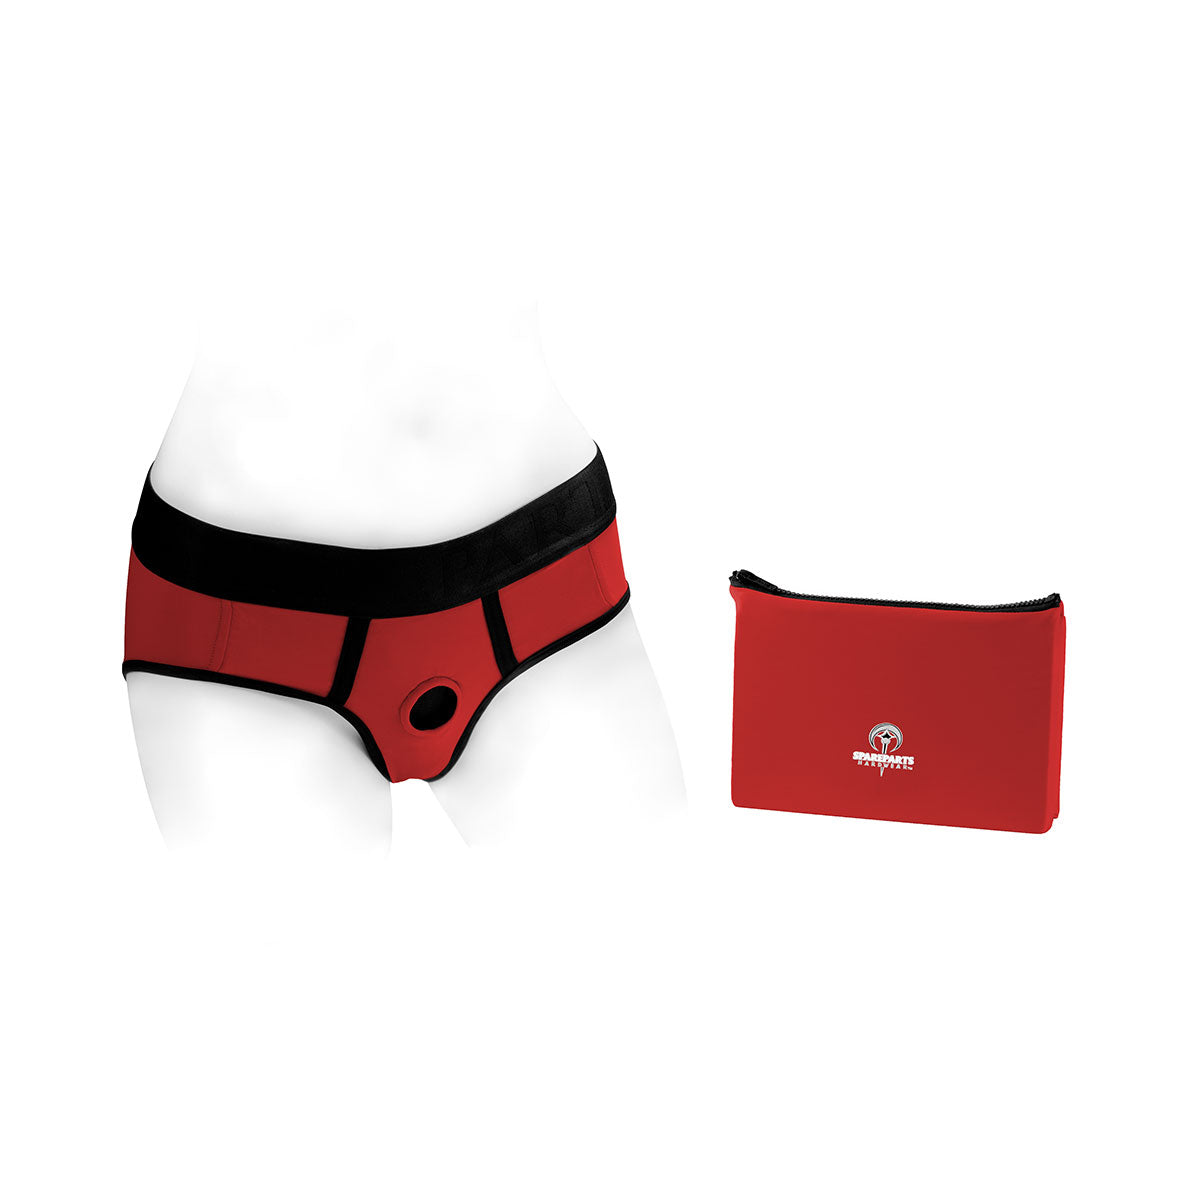 SpareParts Tomboi Harness Red/Black Nylon - 2X